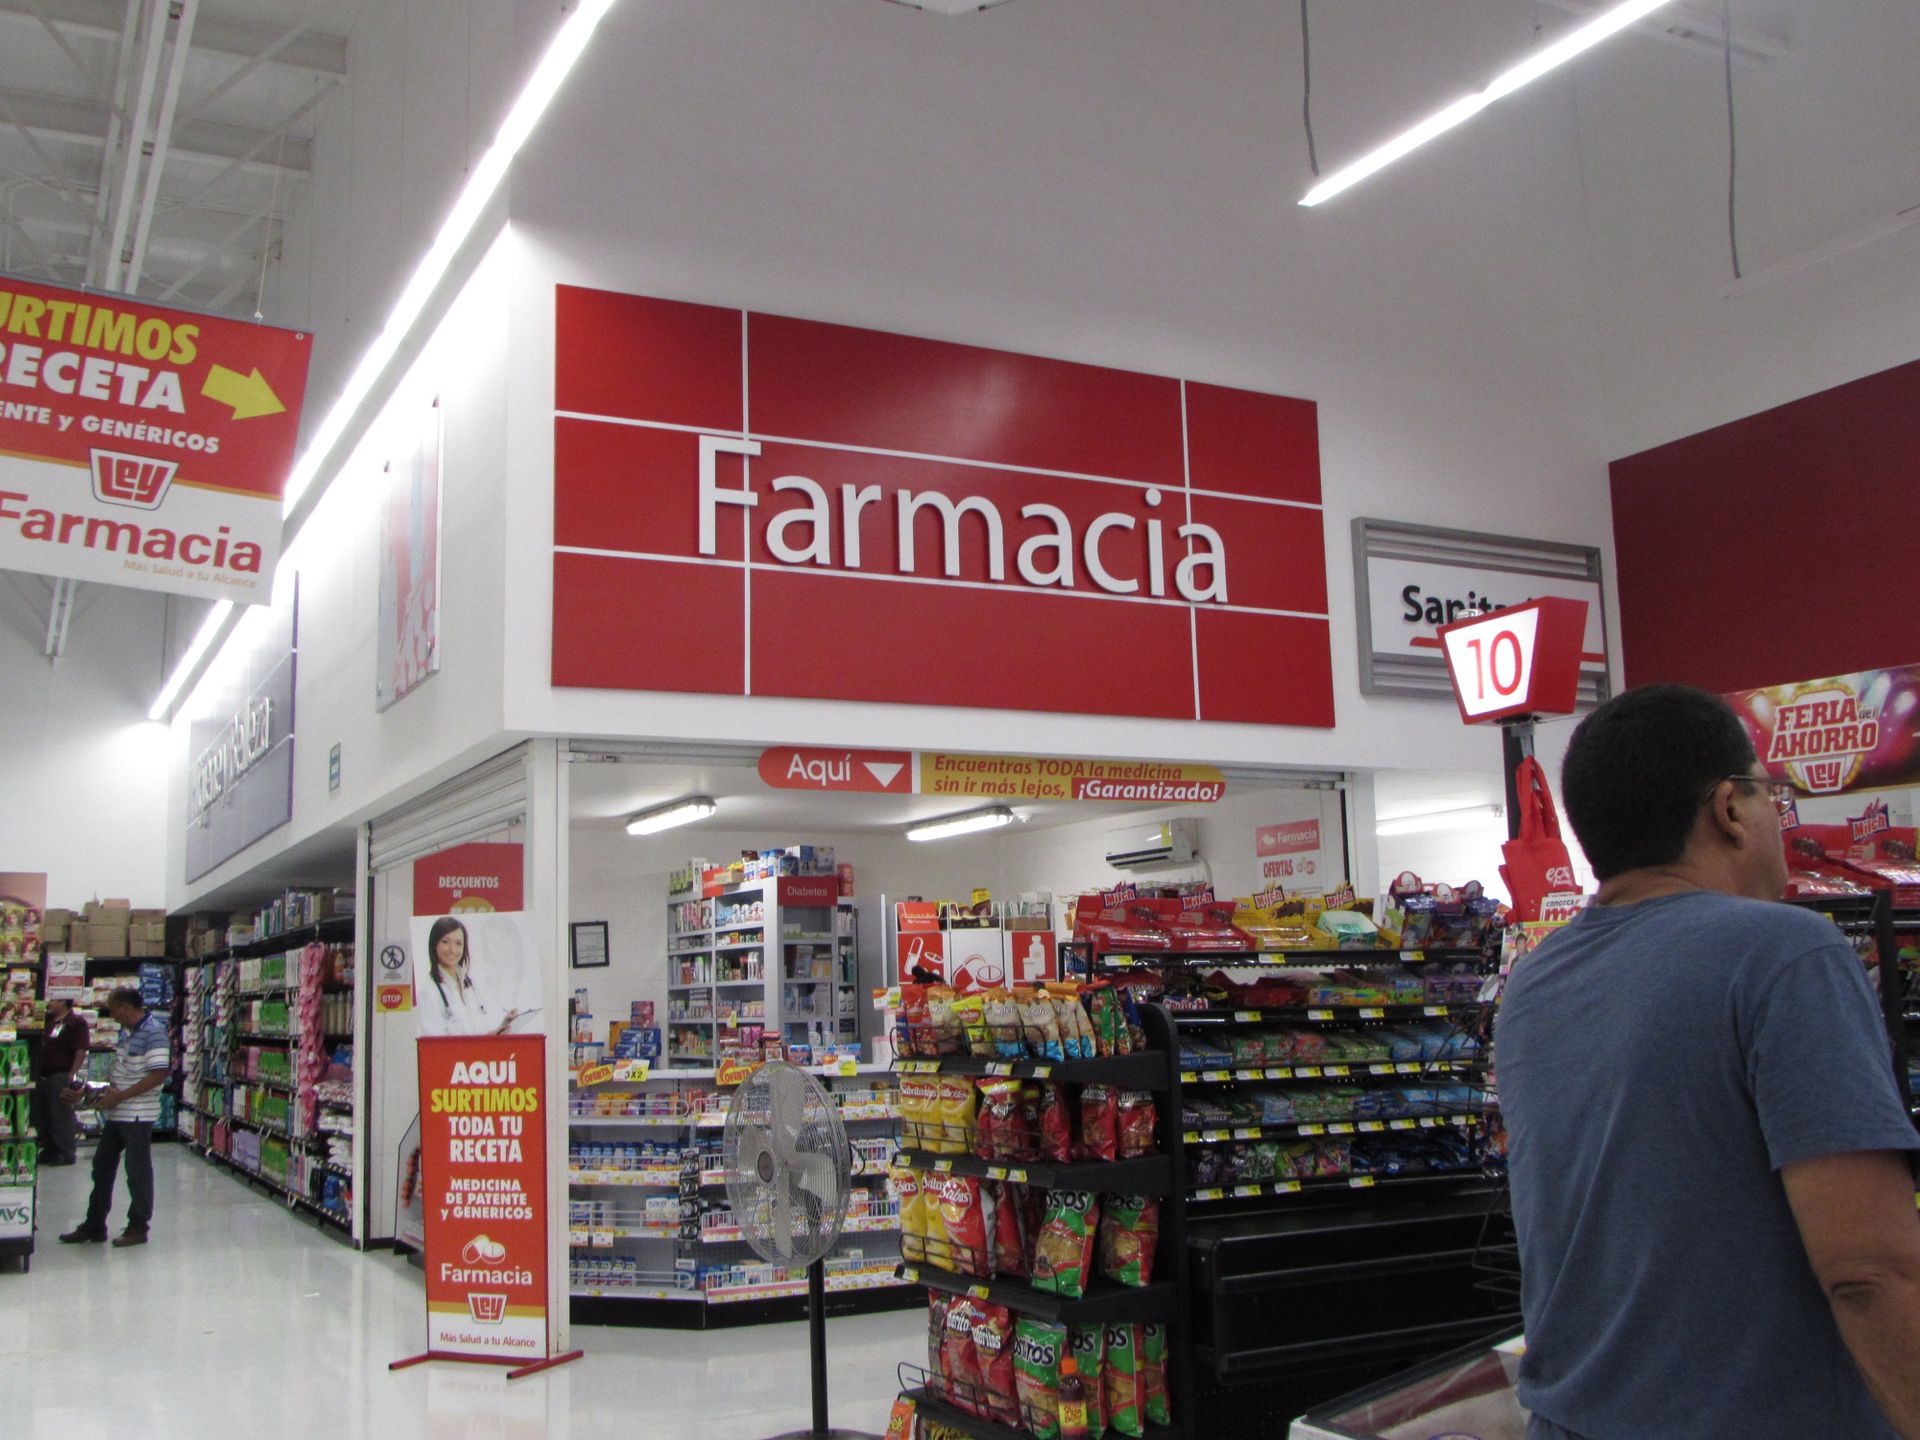 Santa Rosalia Baja California Sur Pharmacy and Shopping